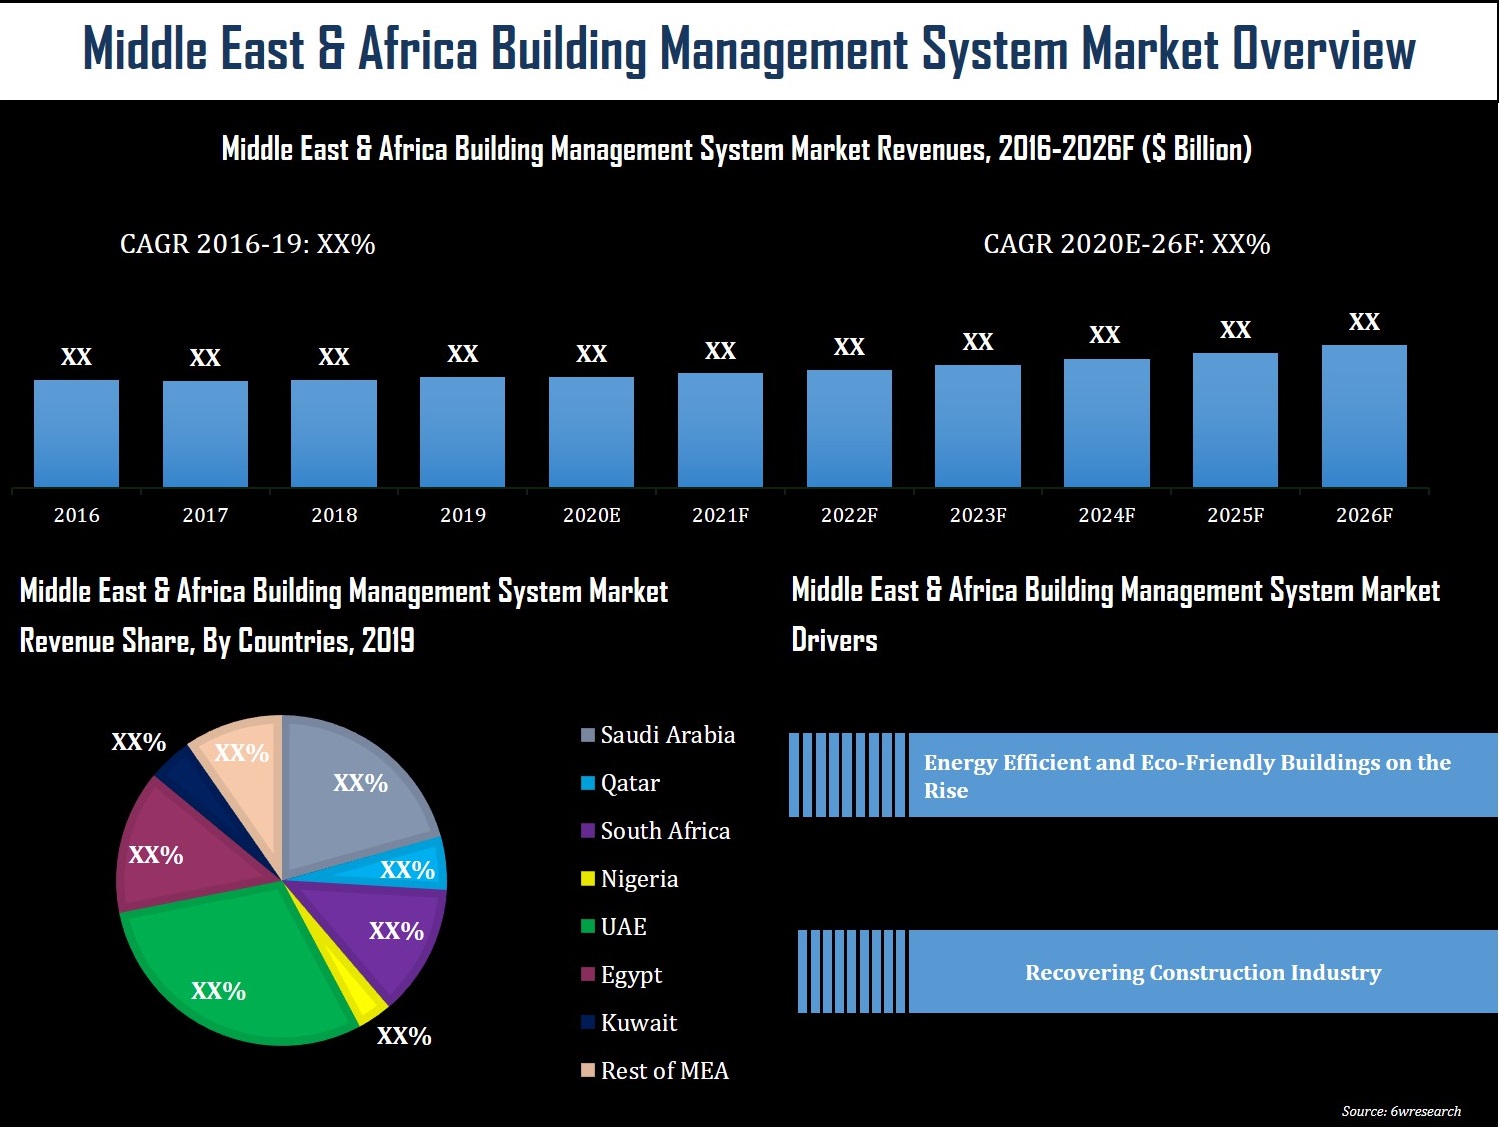 Middle East & Africa (MEA) Building Management System Market